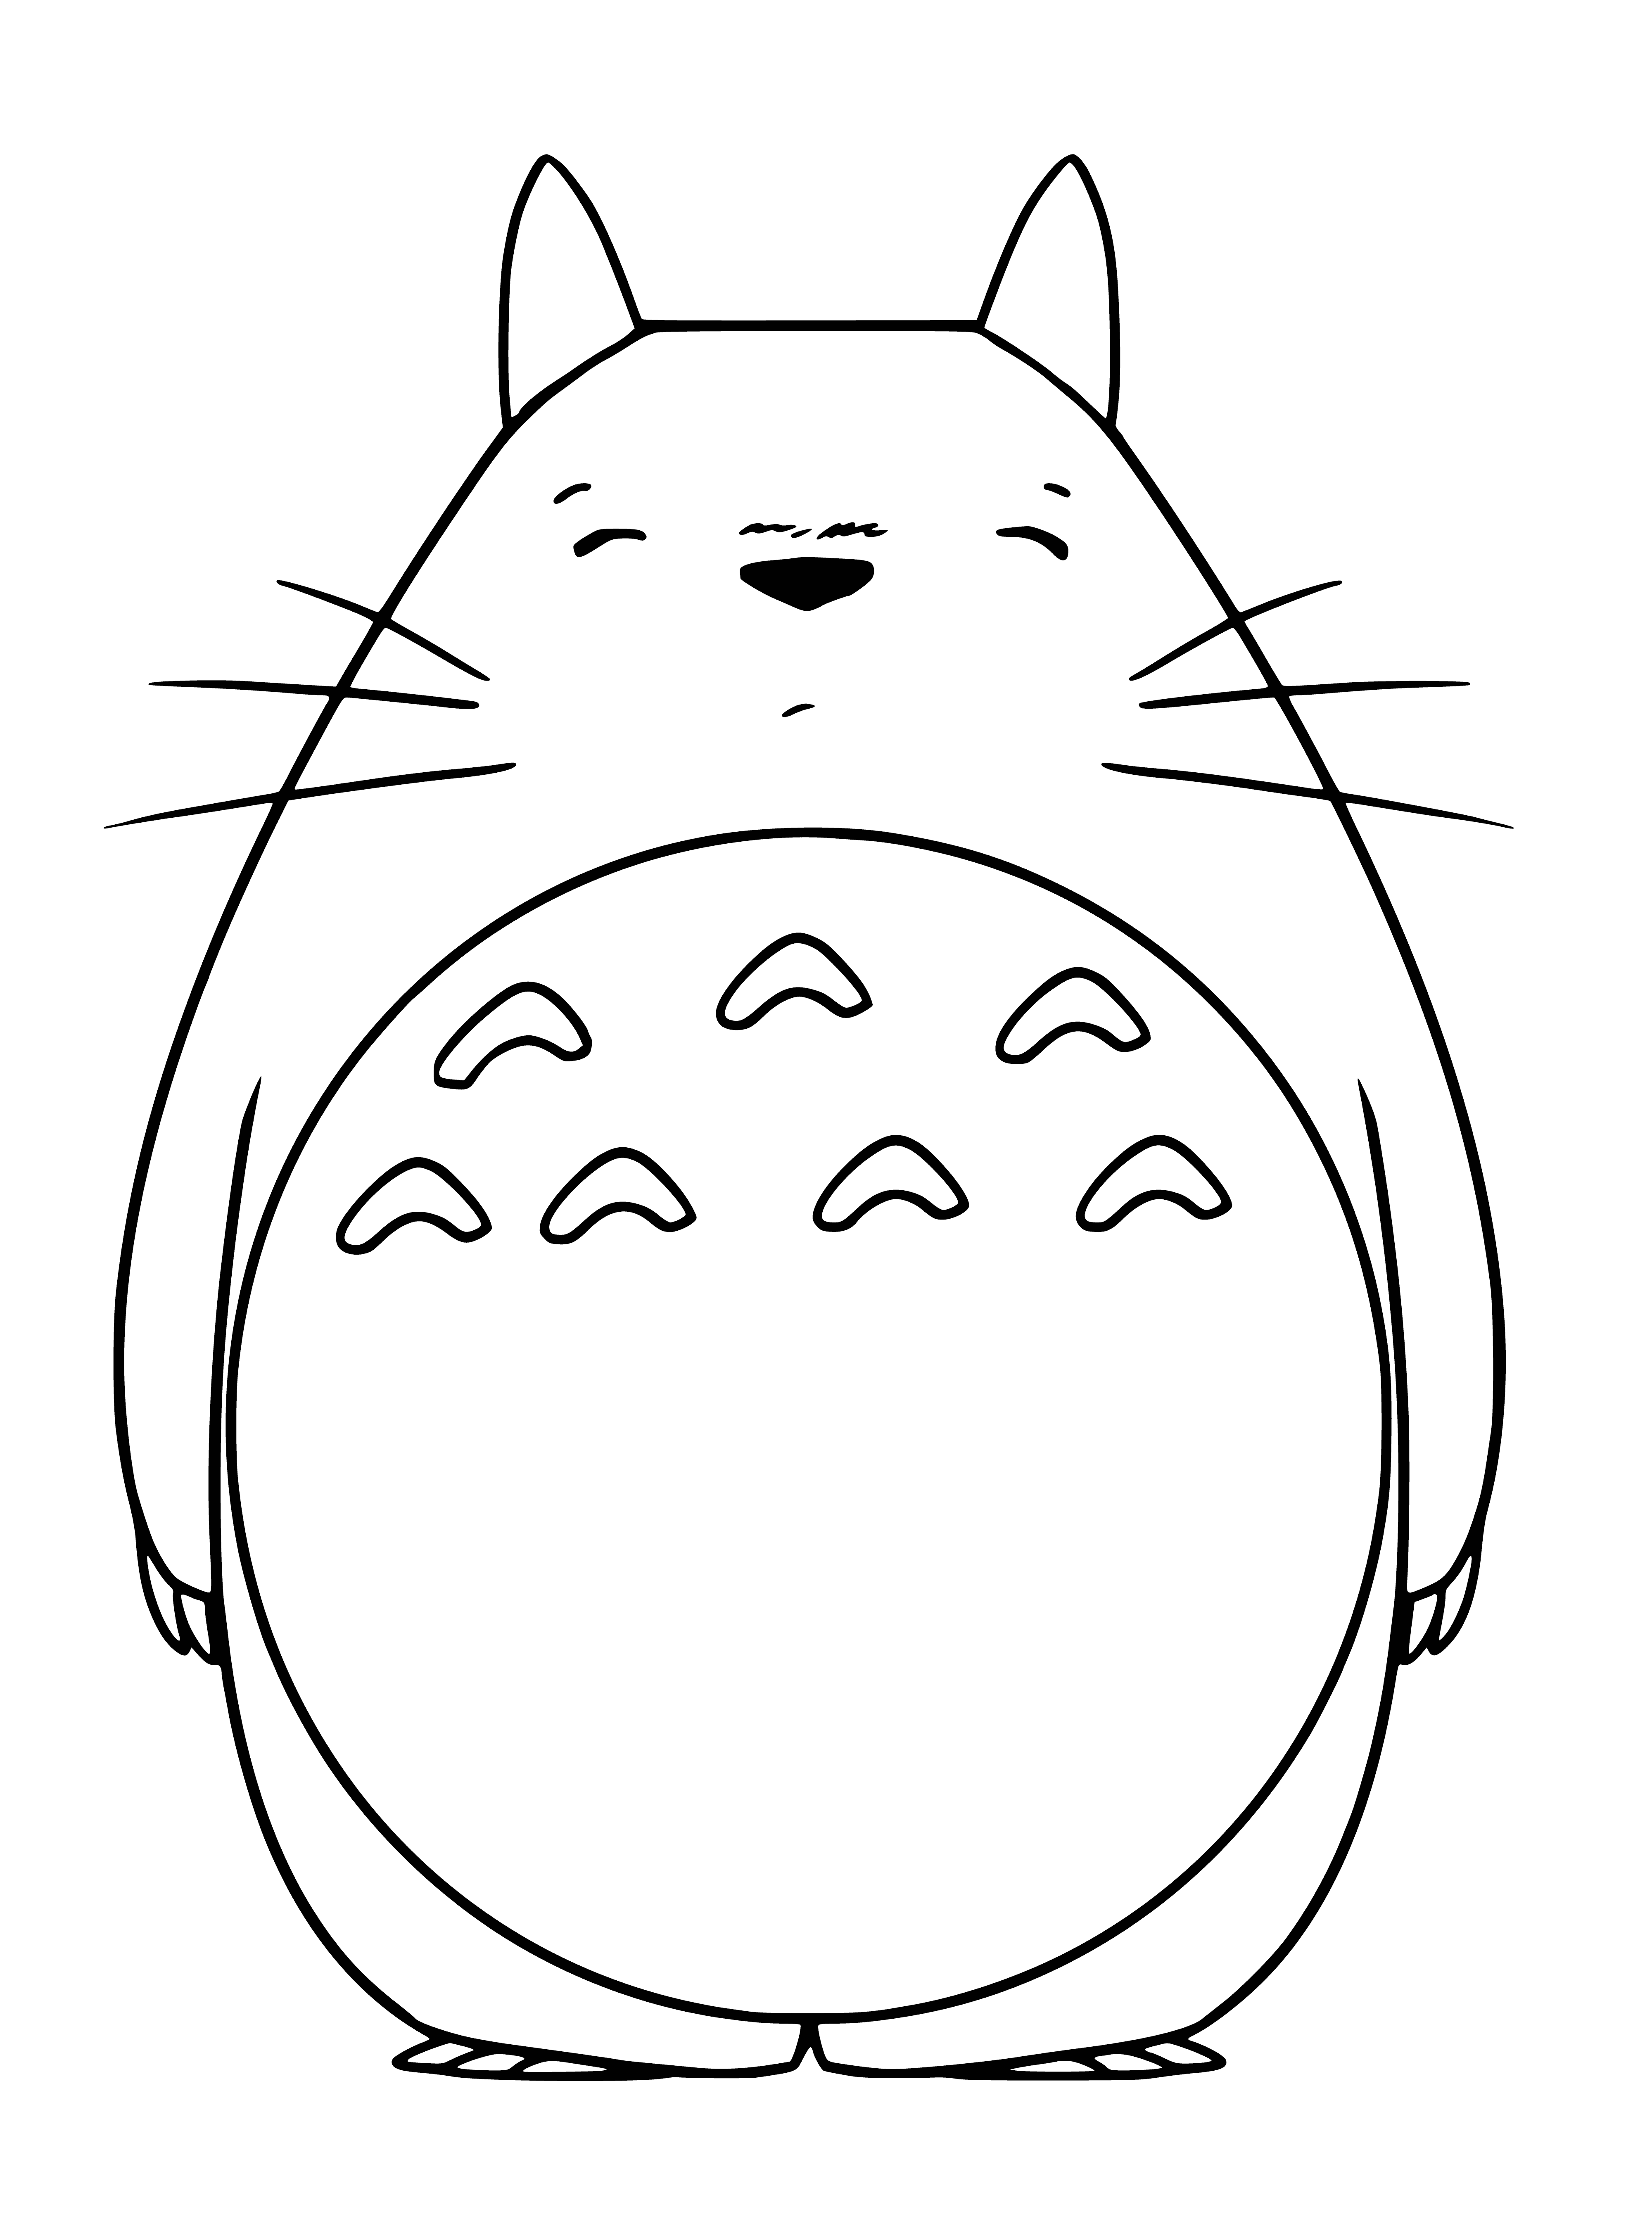 Totoro Esprit de la forêt coloriage